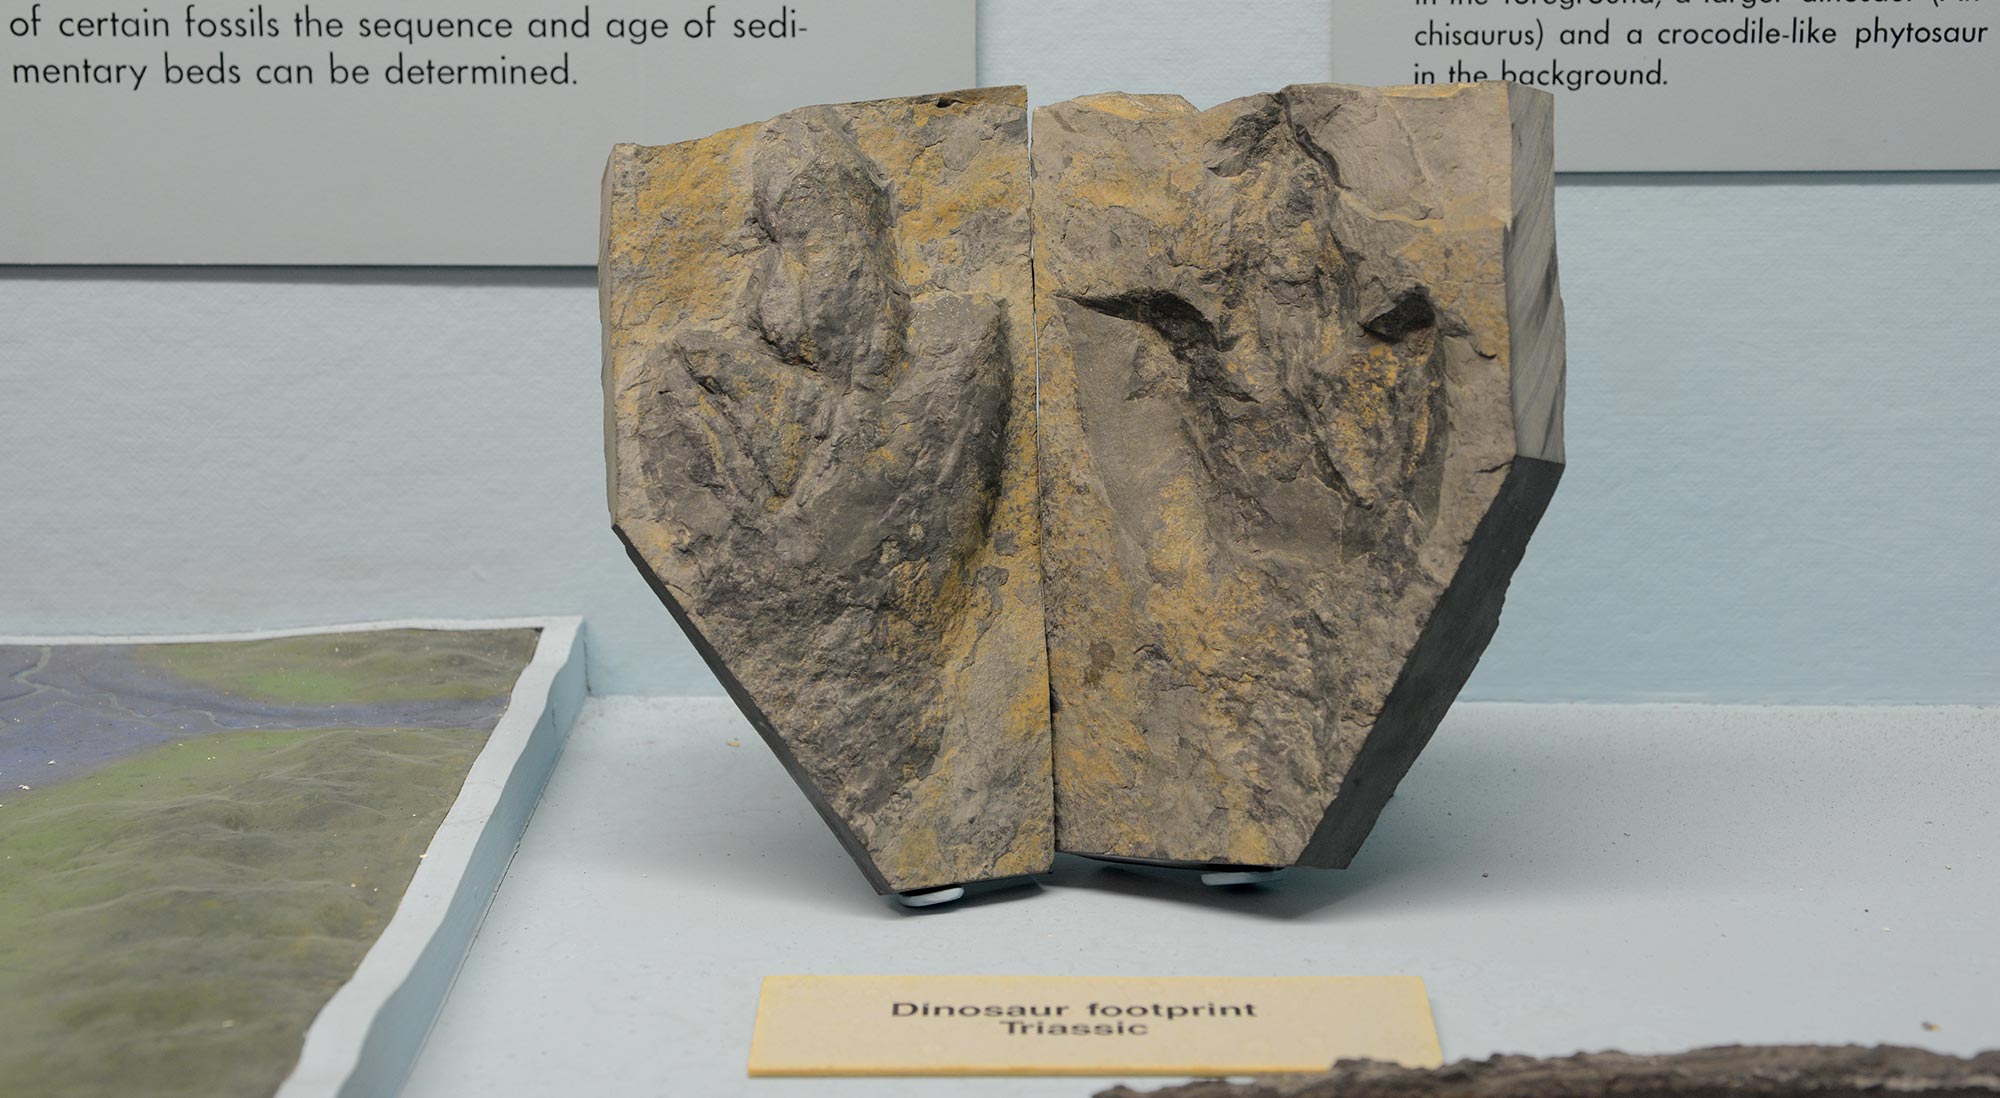 Fossil of dinosaur footprint in museum case